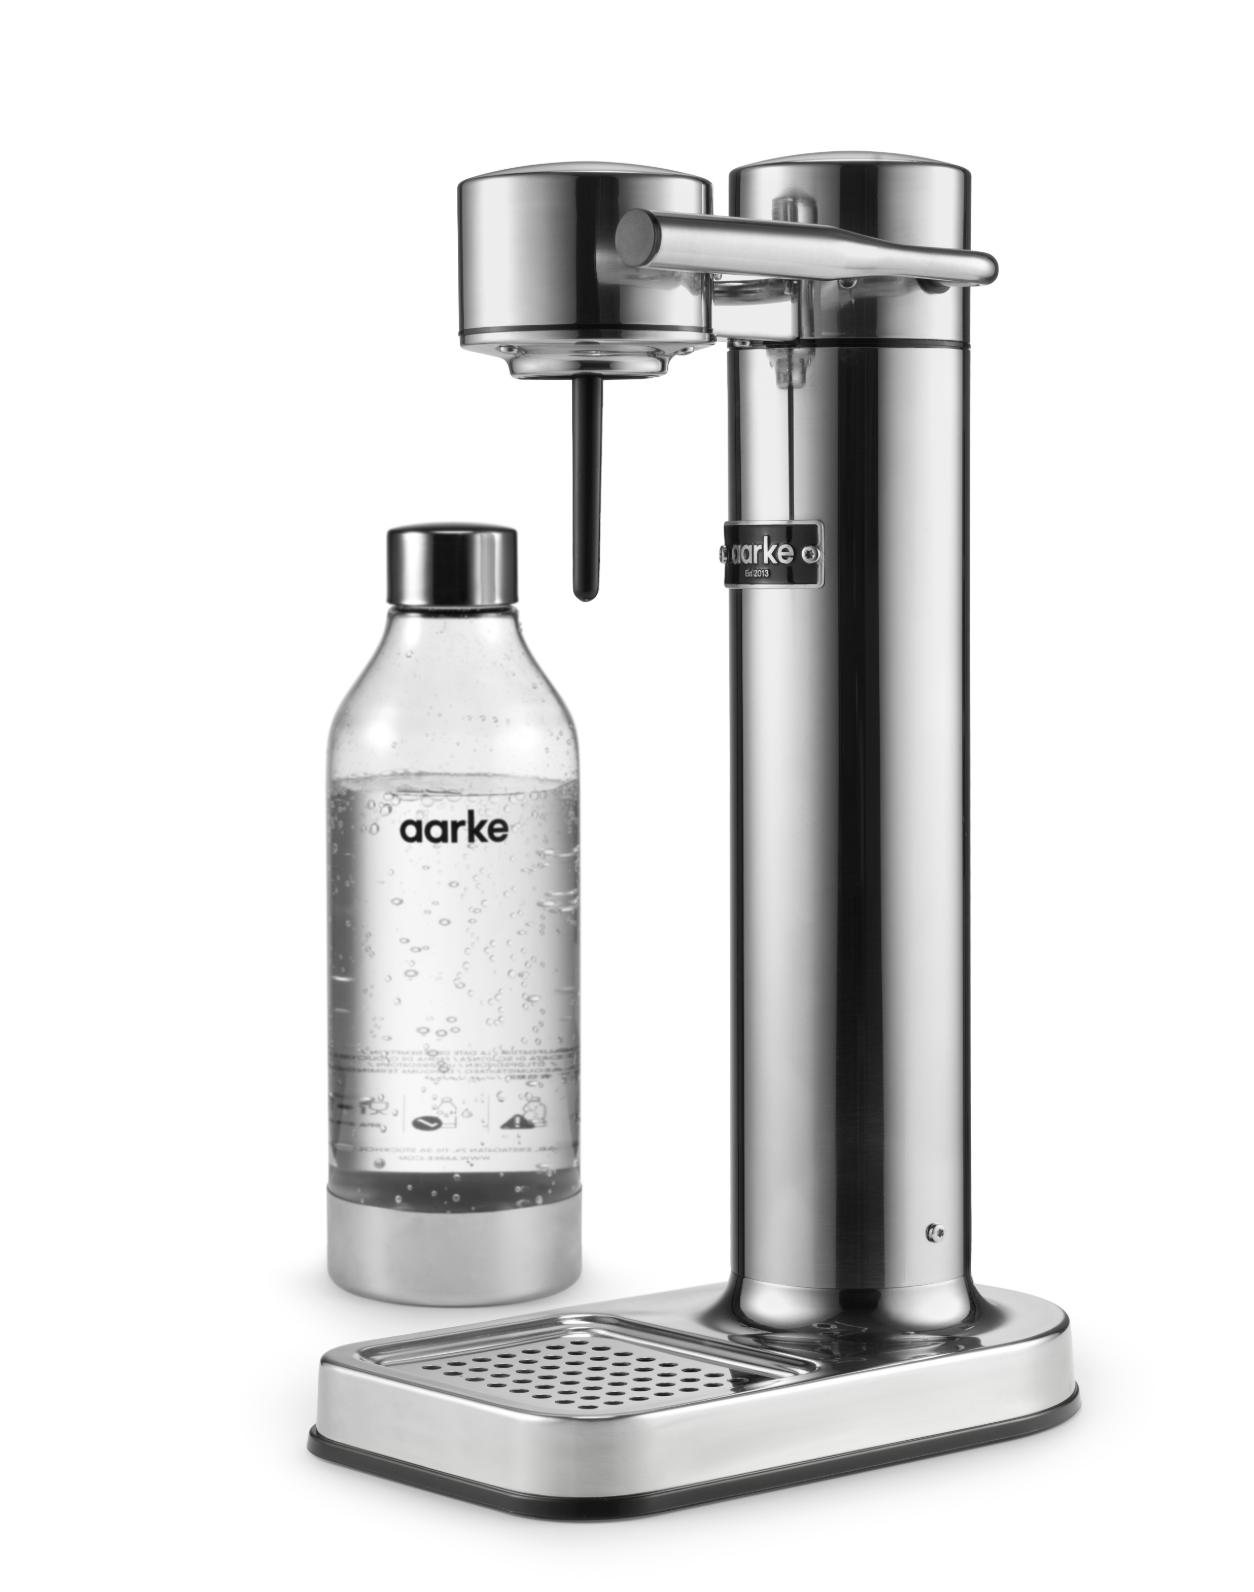 SodaStream Aarke Carbonator III + Single Gas Cylinder Bundle – Steel